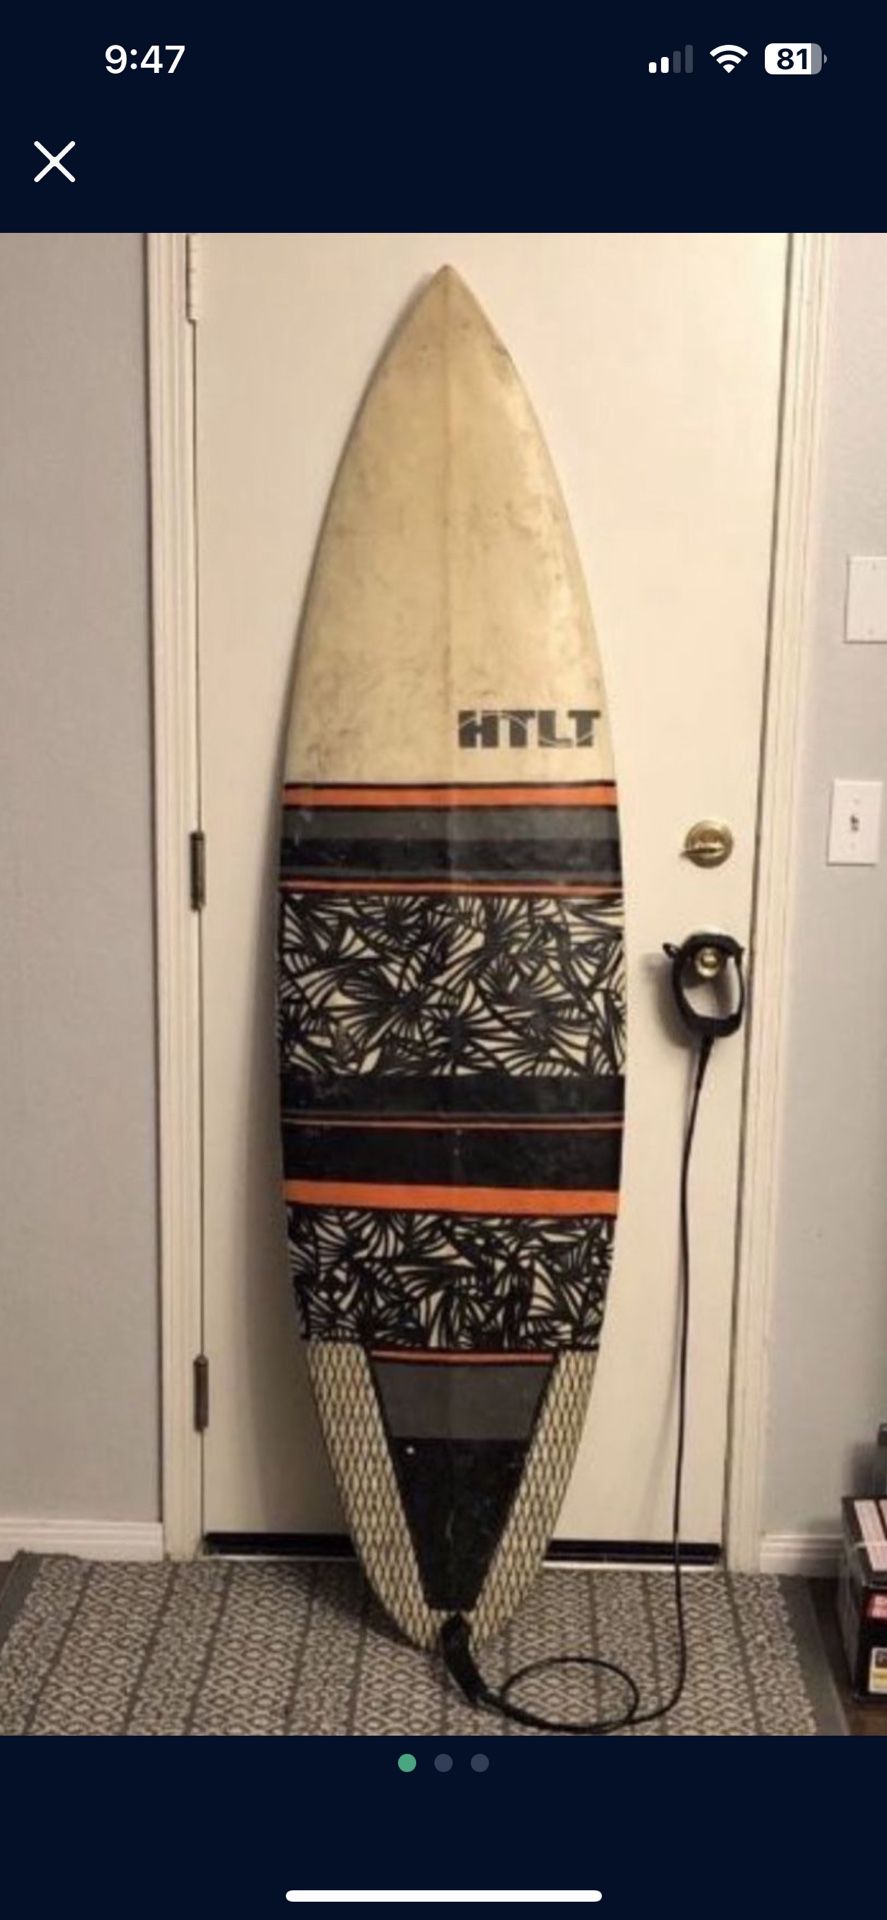 HTLT Surfboard